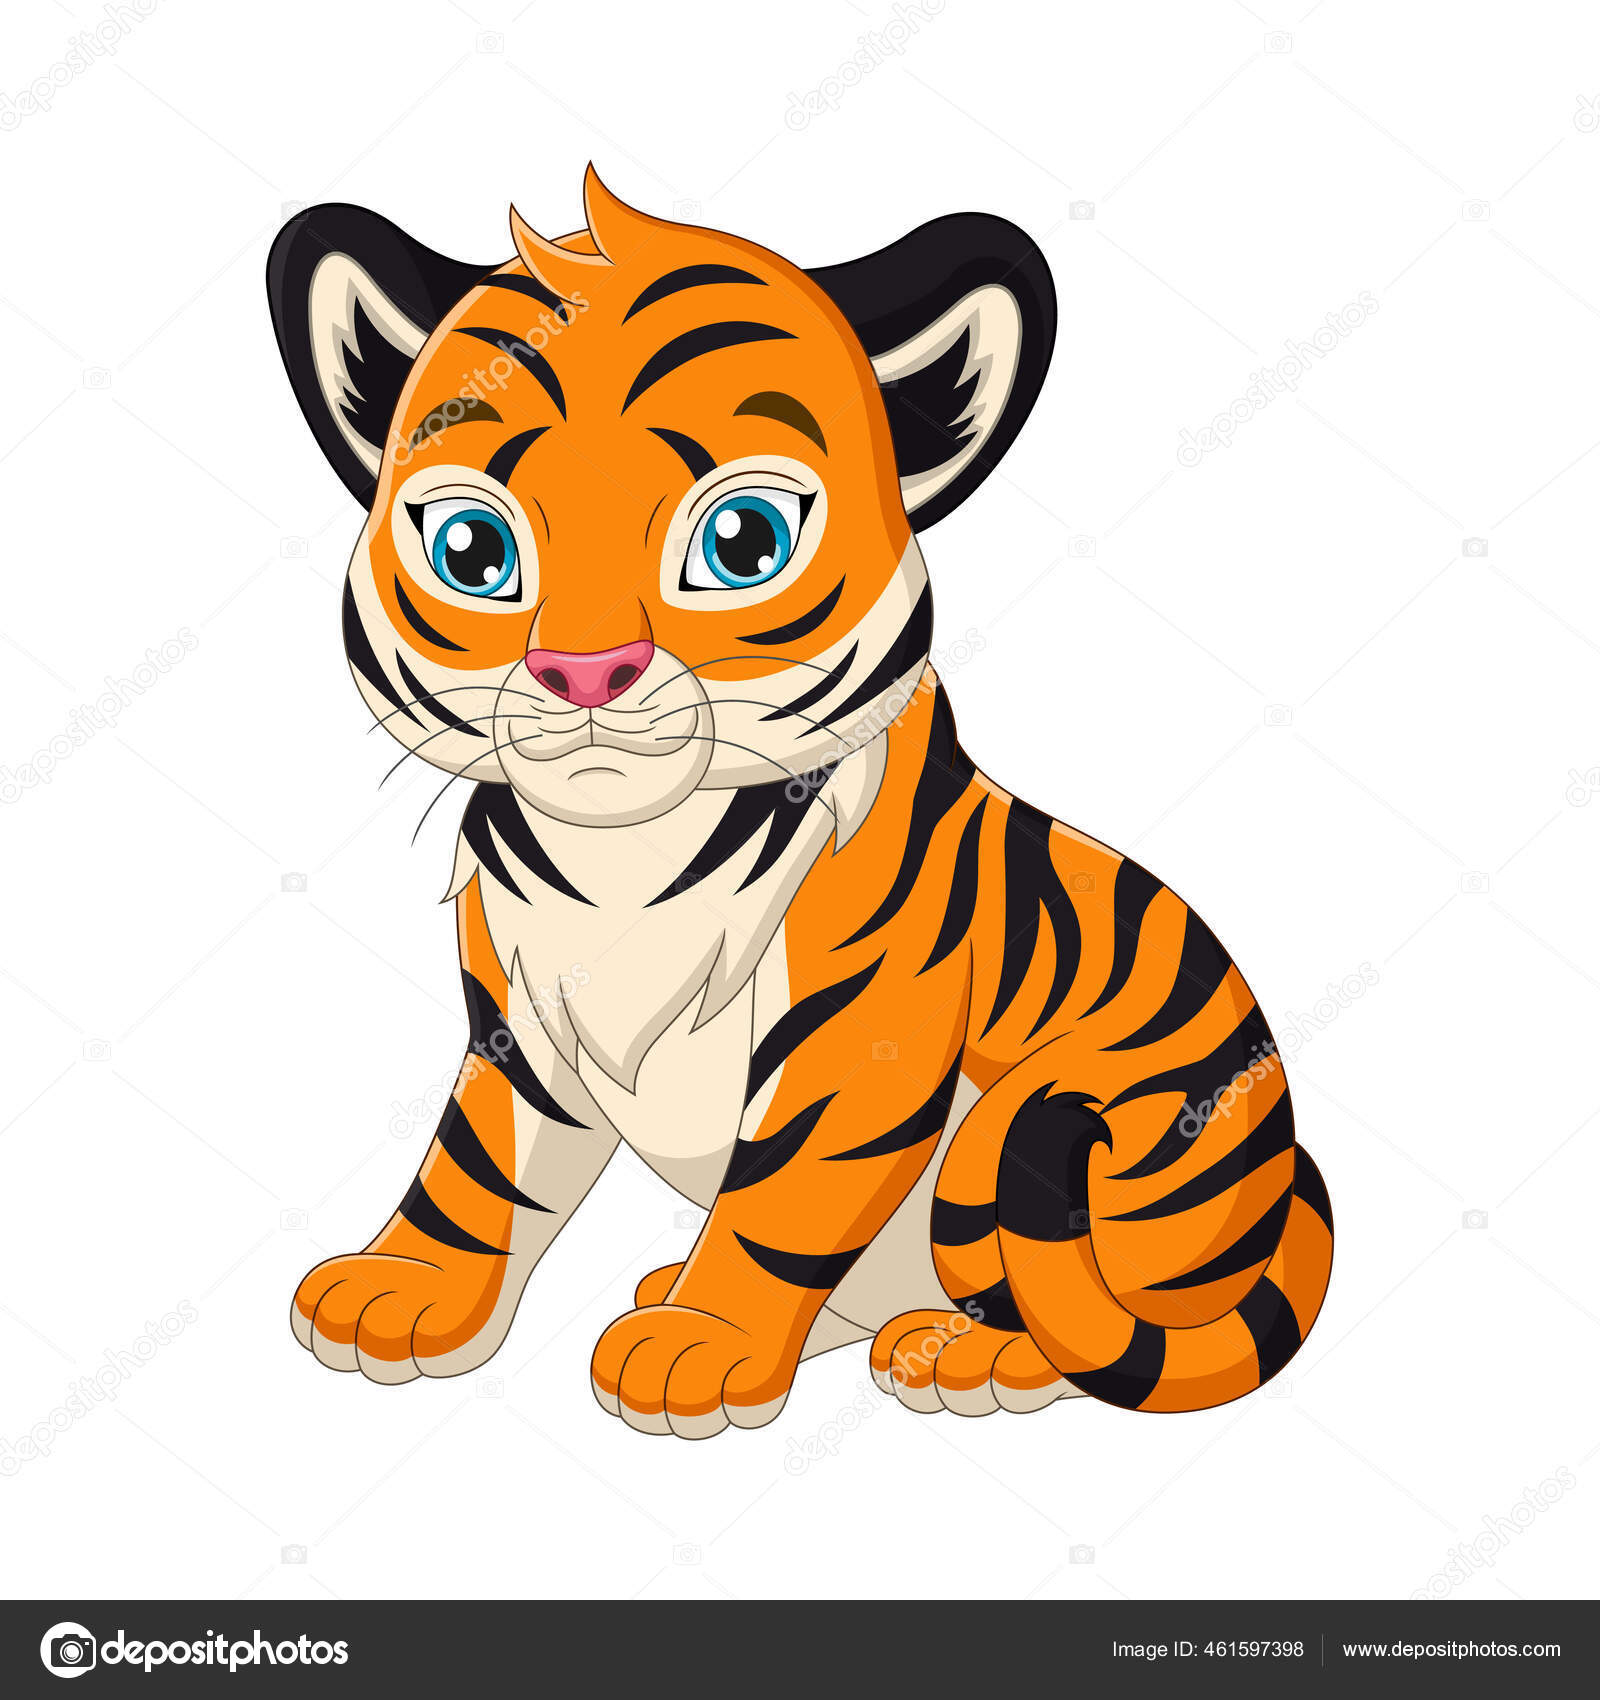 Illustration Vectorielle Bebe Tigre Dessin Anime Mignon Sur Fond Blanc Image Vectorielle Par Mimosastudio C Illustration